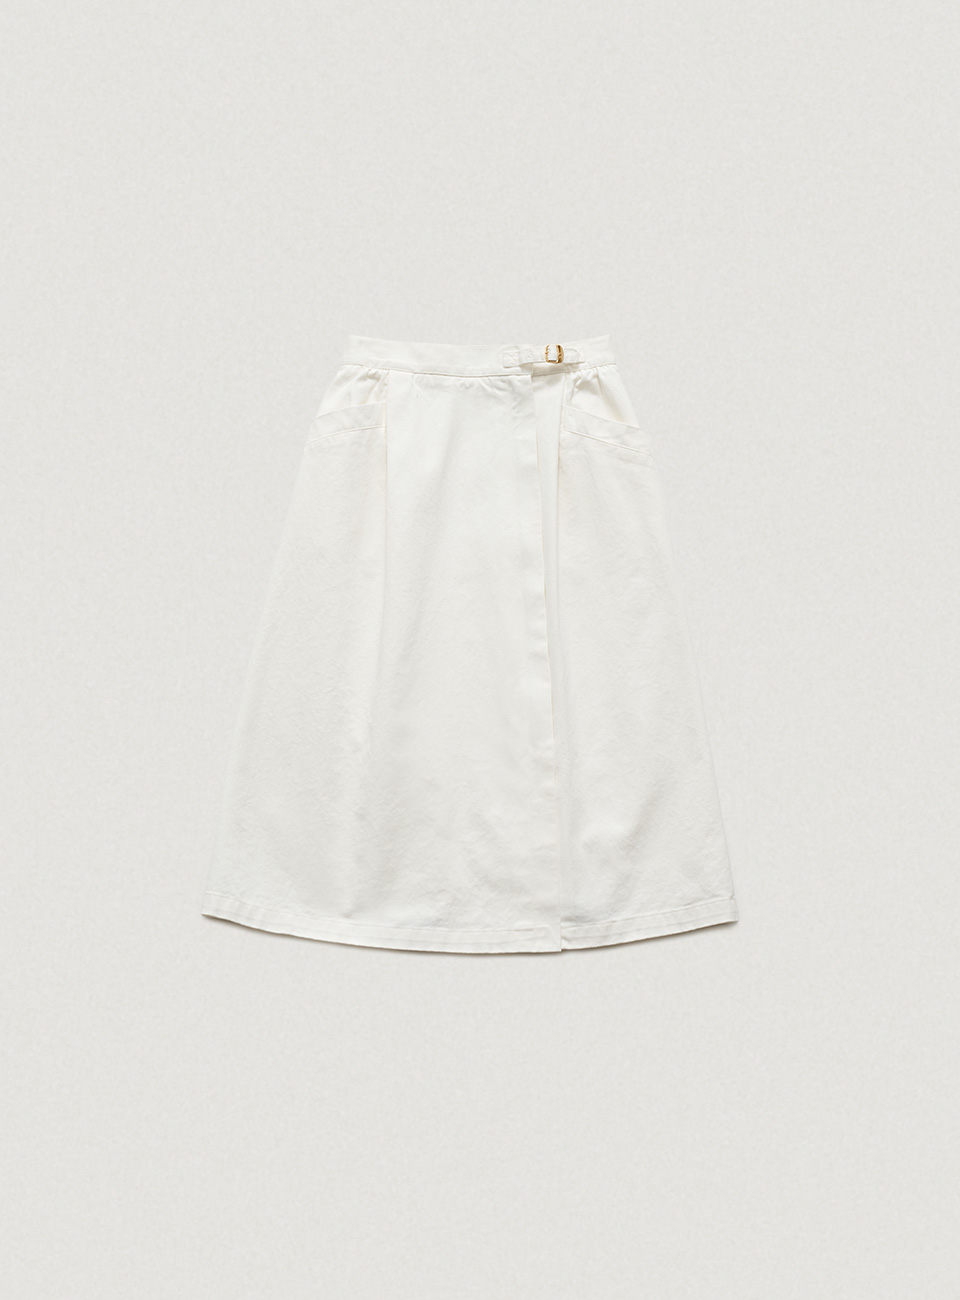 Rustic Cotton Skirt [6월 초 순차 배송]